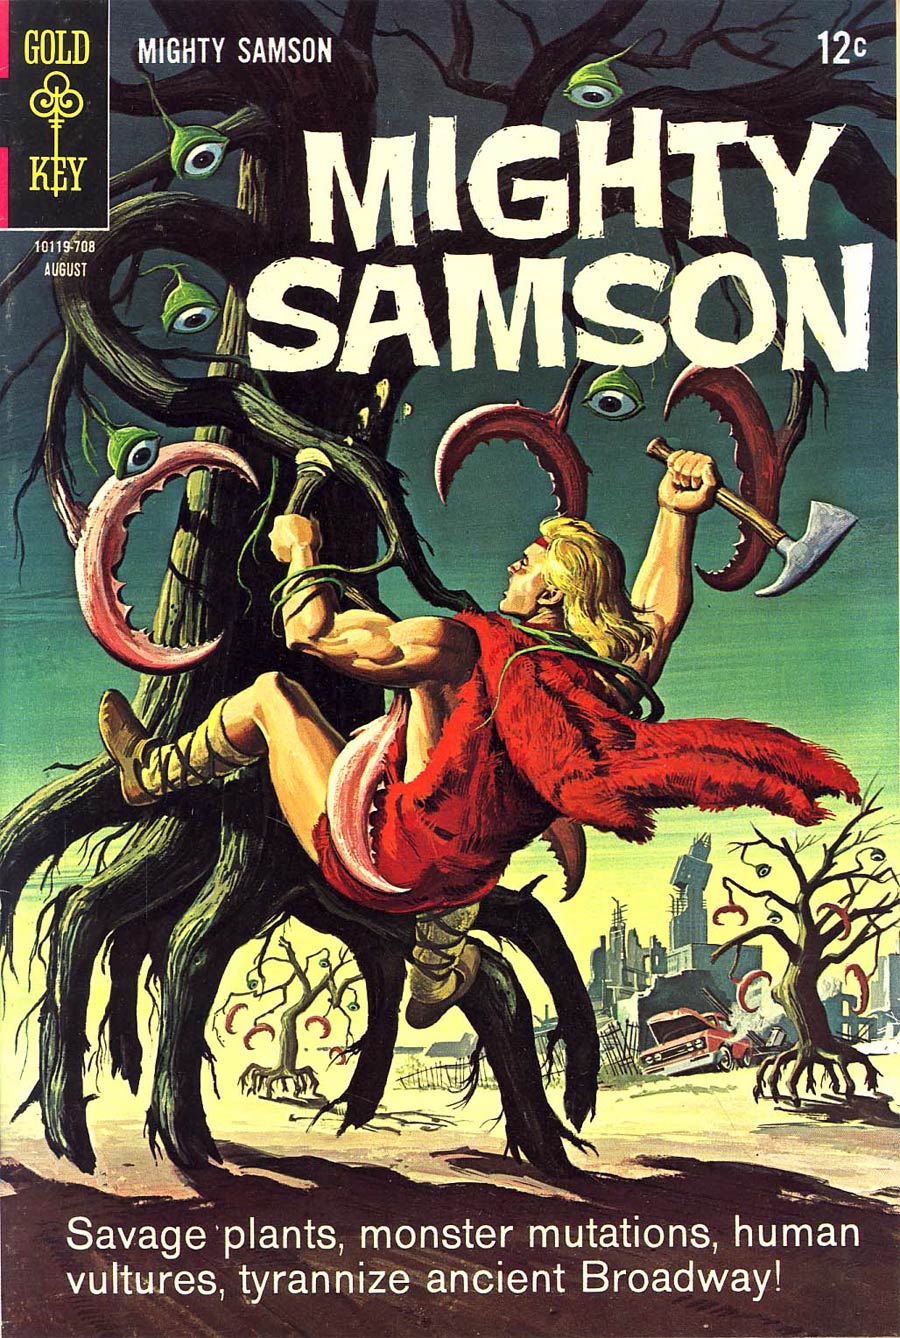 Mighty Samson #11